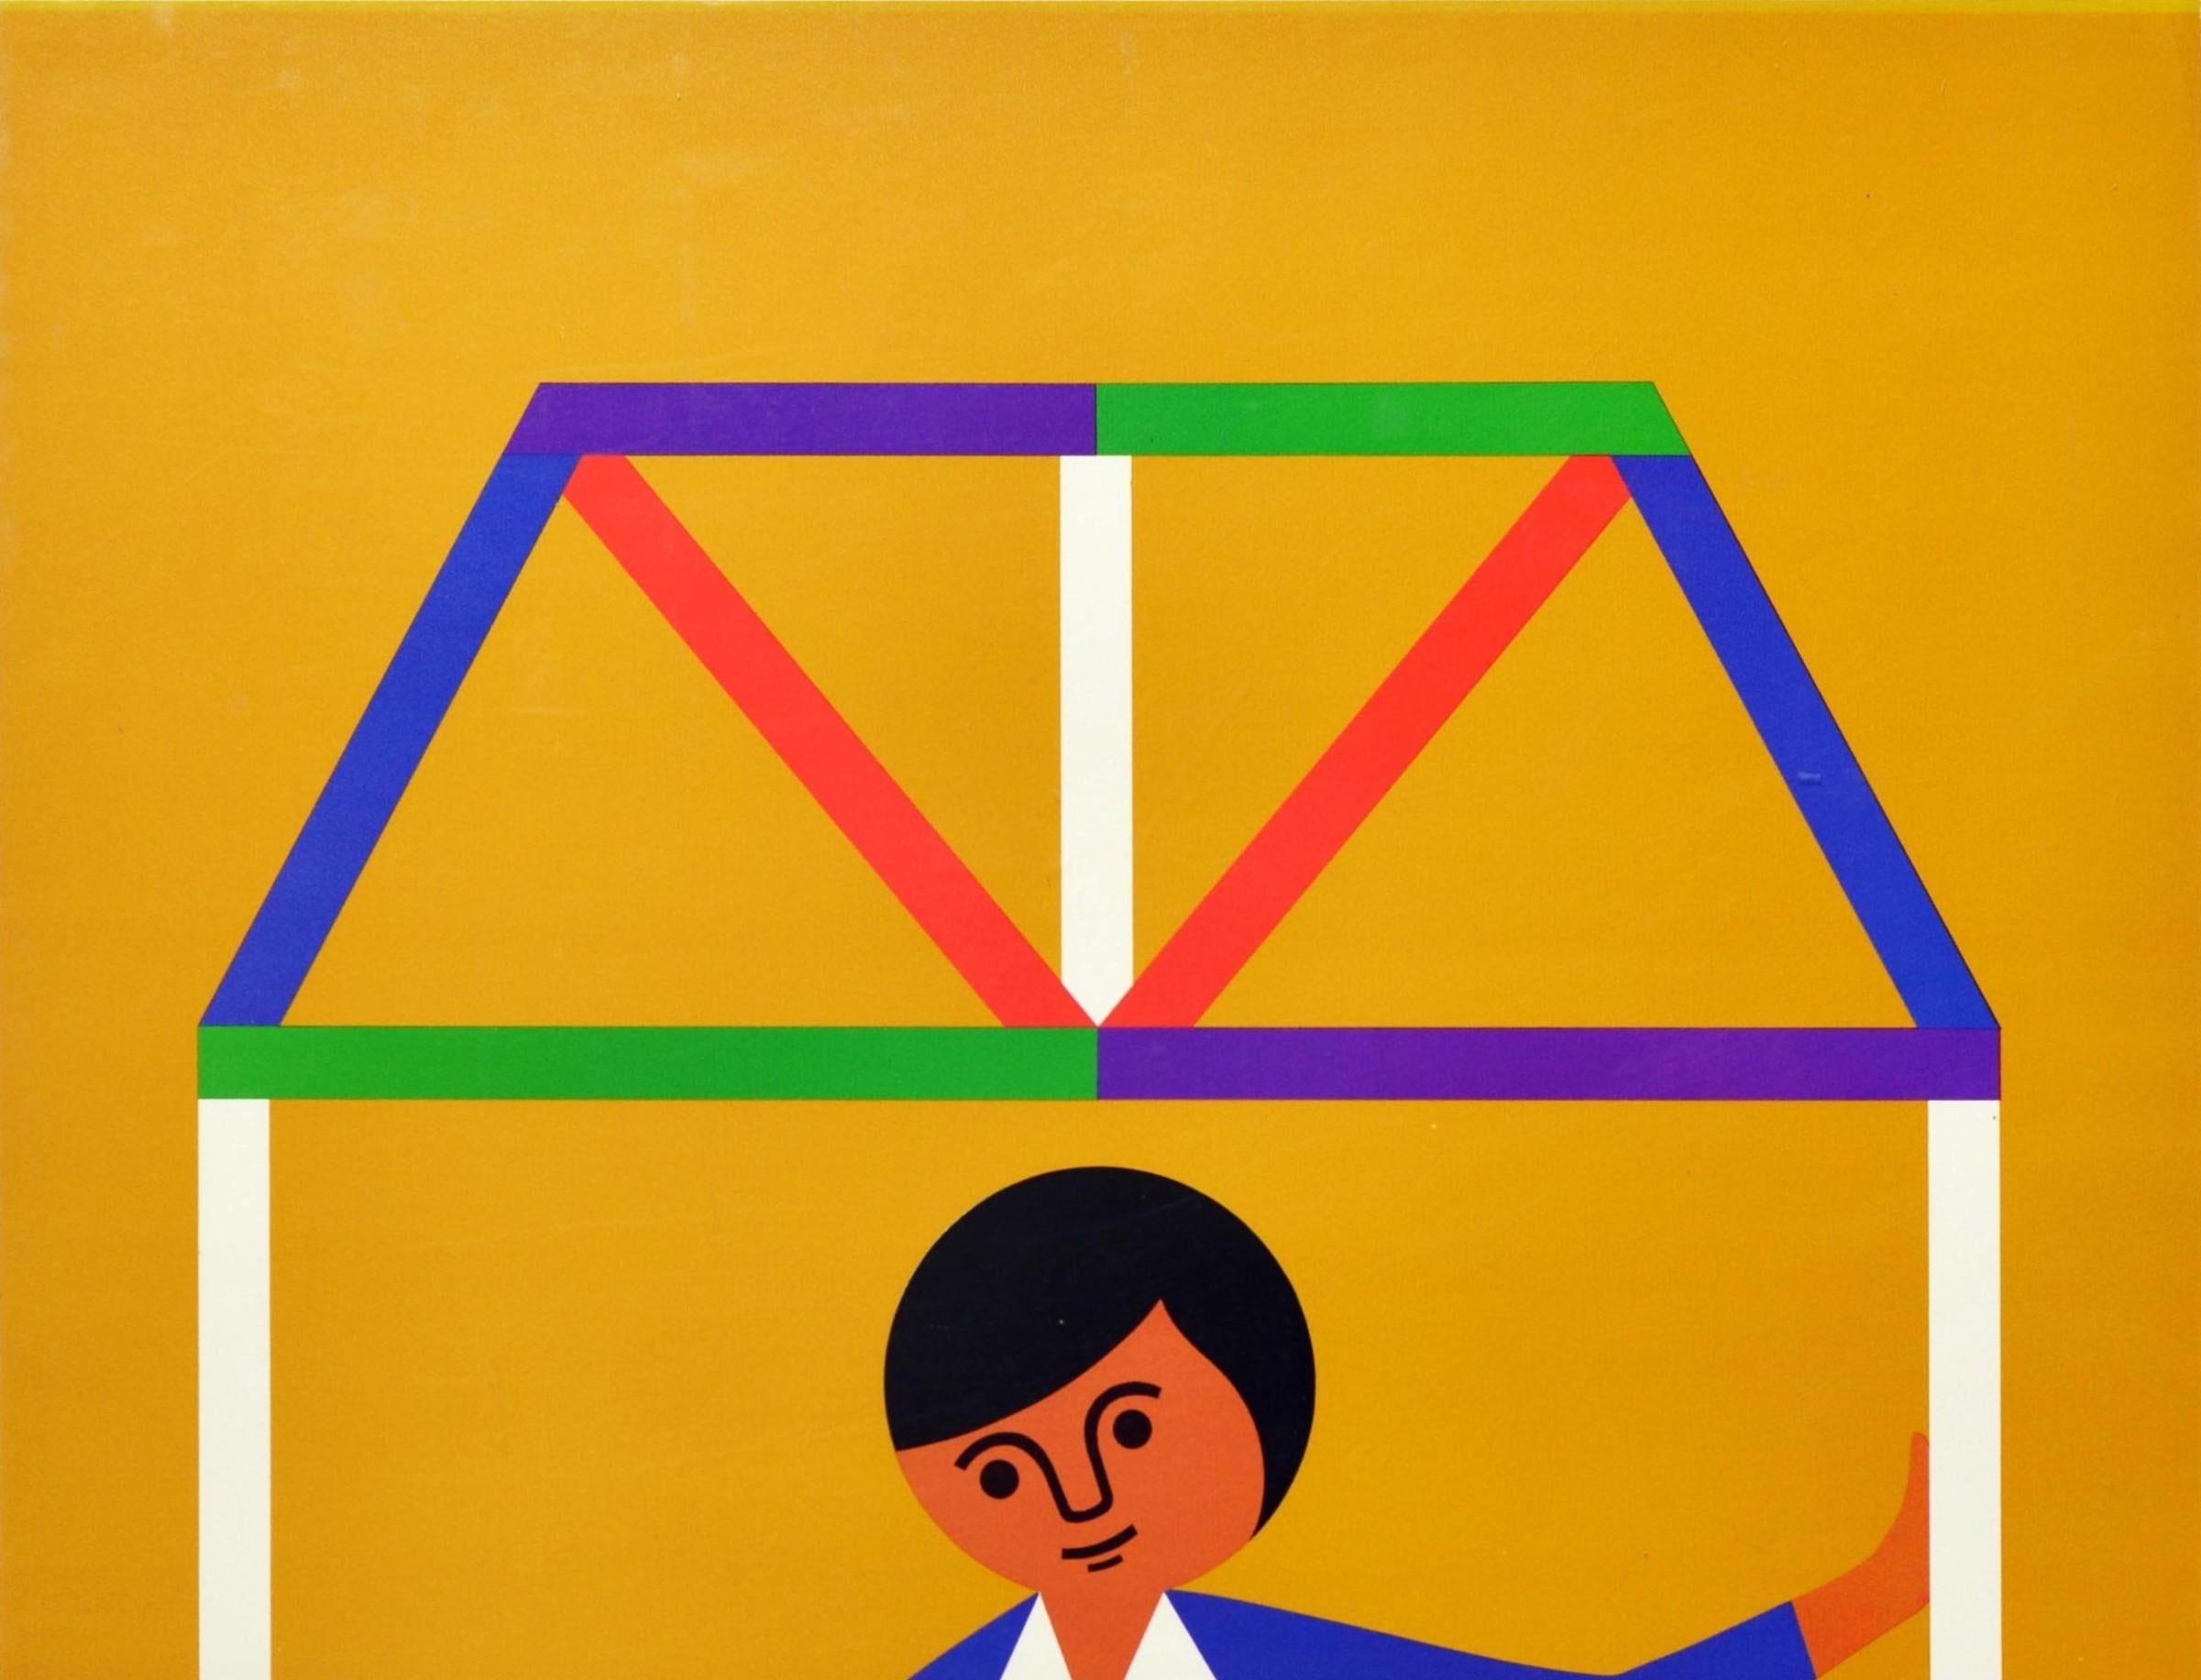 Original Vintage Poster Creative Playthings Educational Toys Building Blocks Art - Print by Fredun Shapur